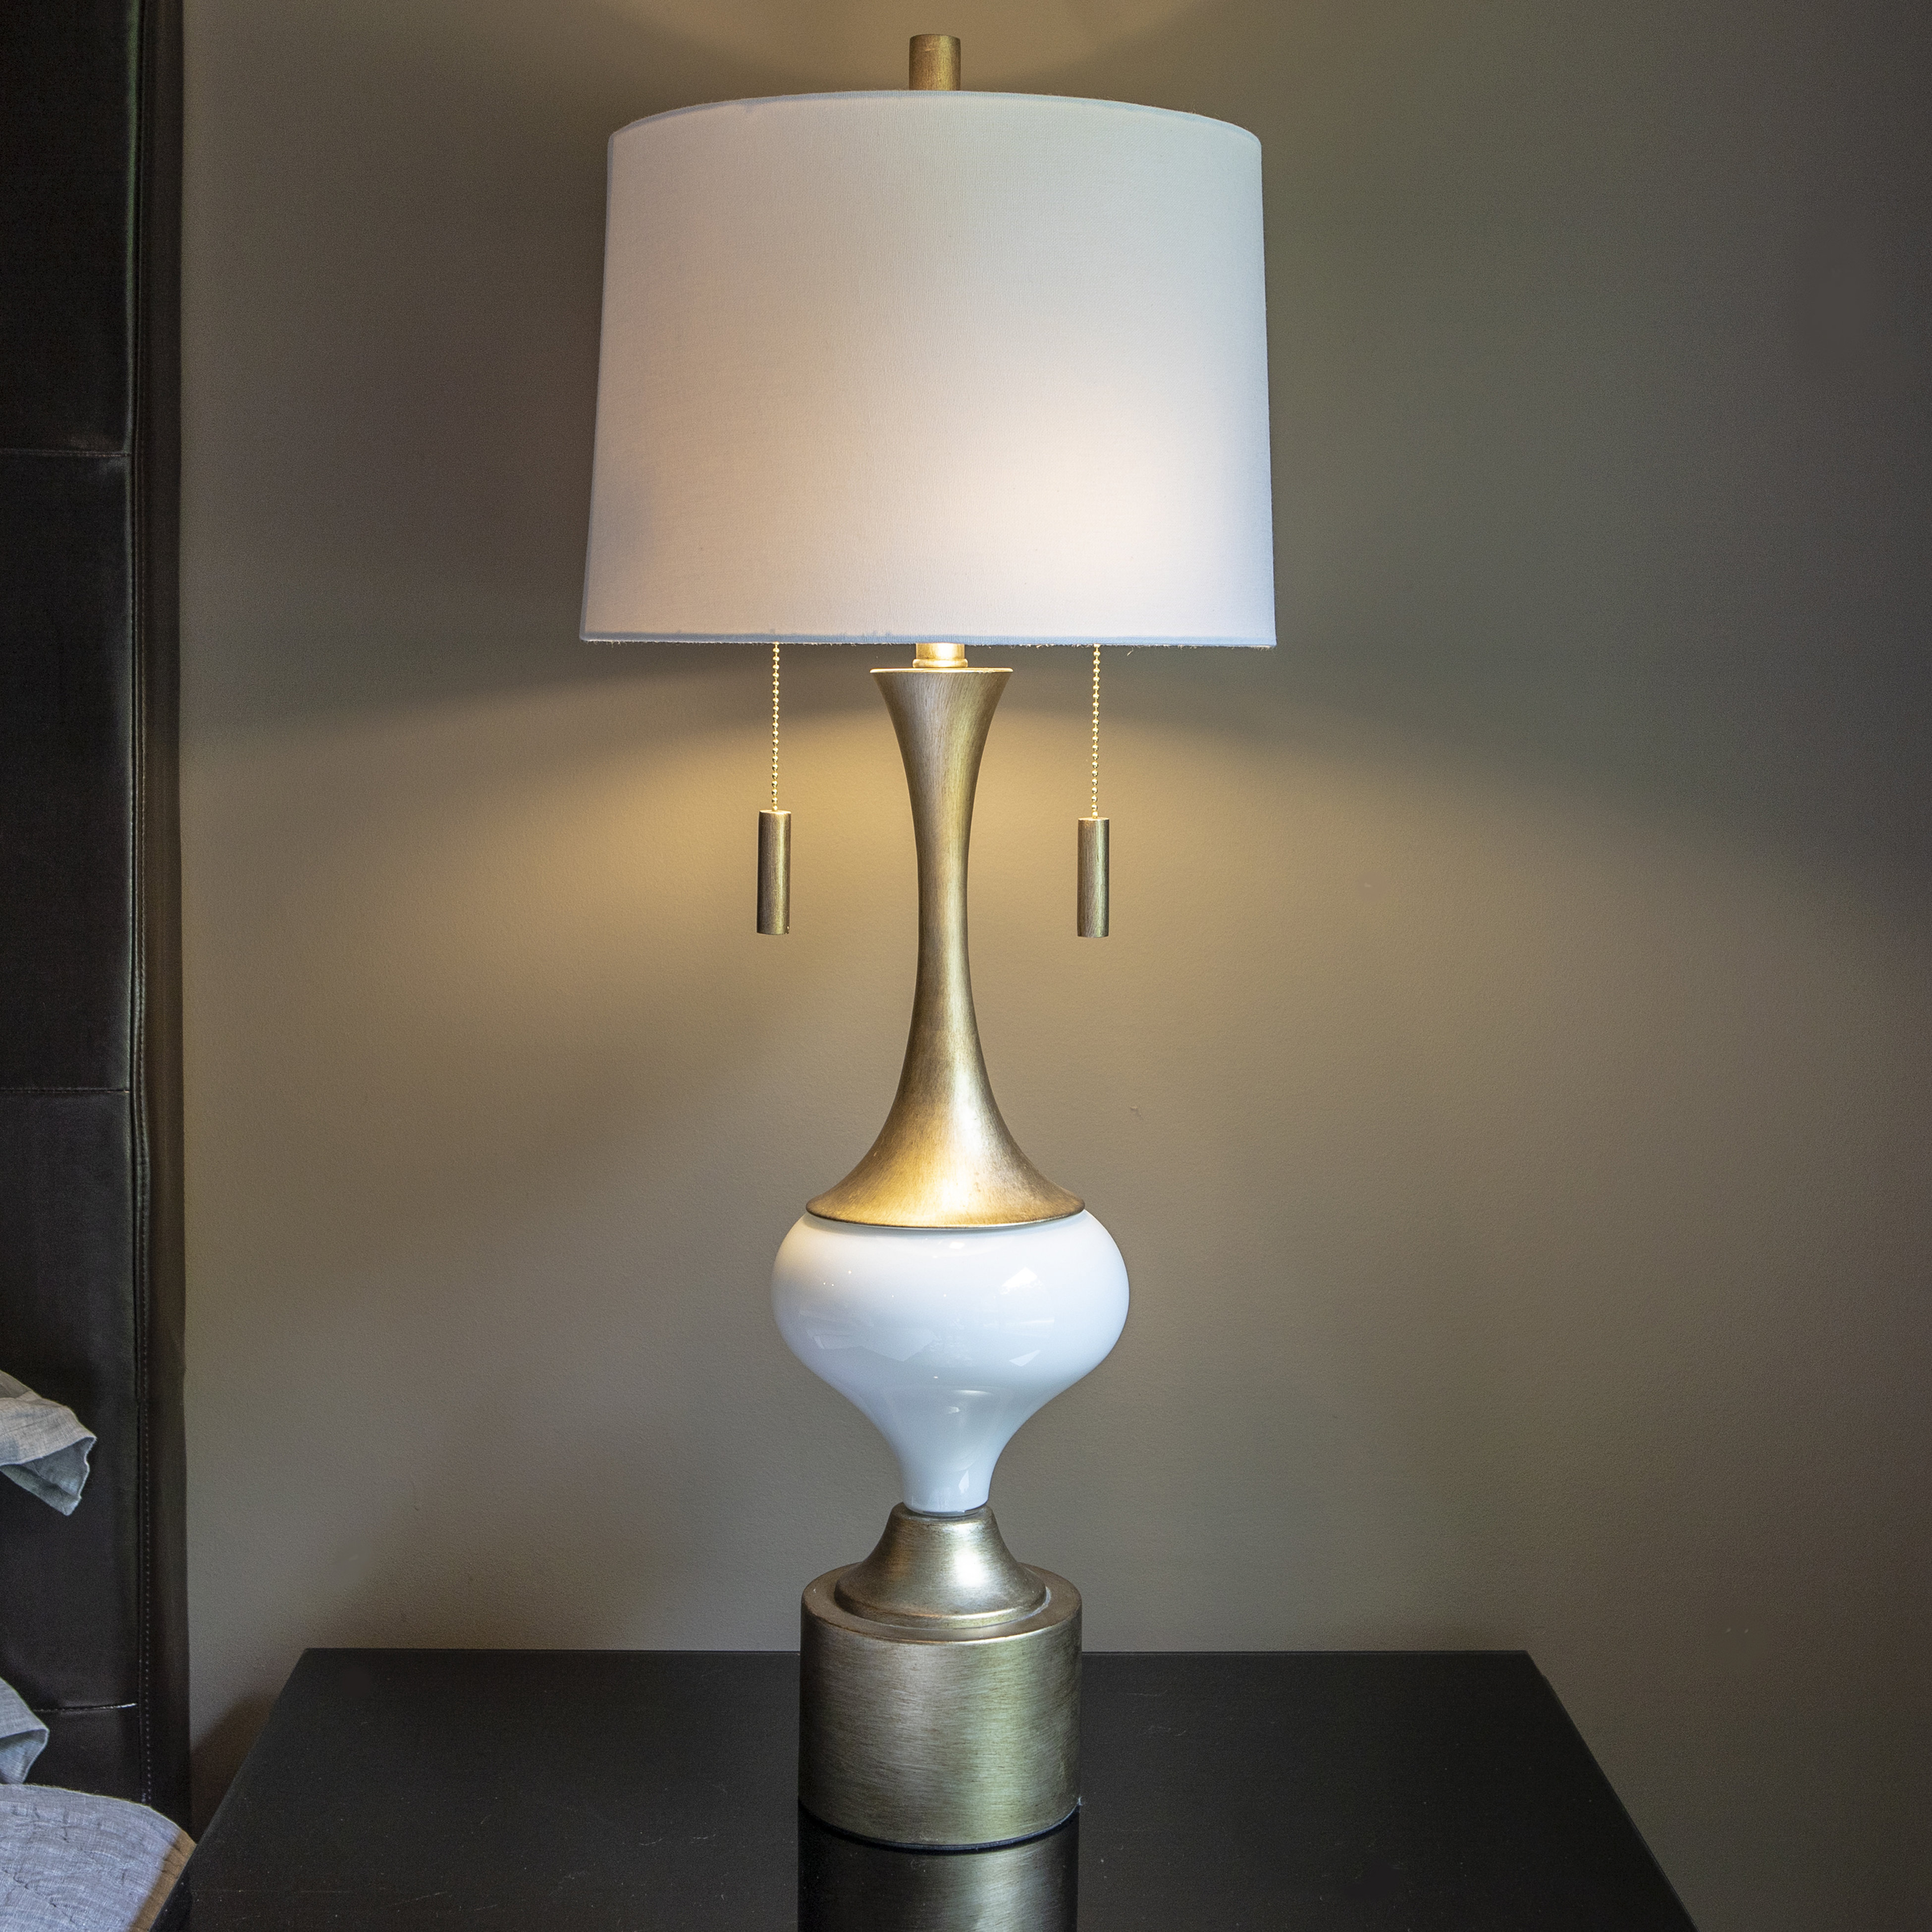 white base table lamps